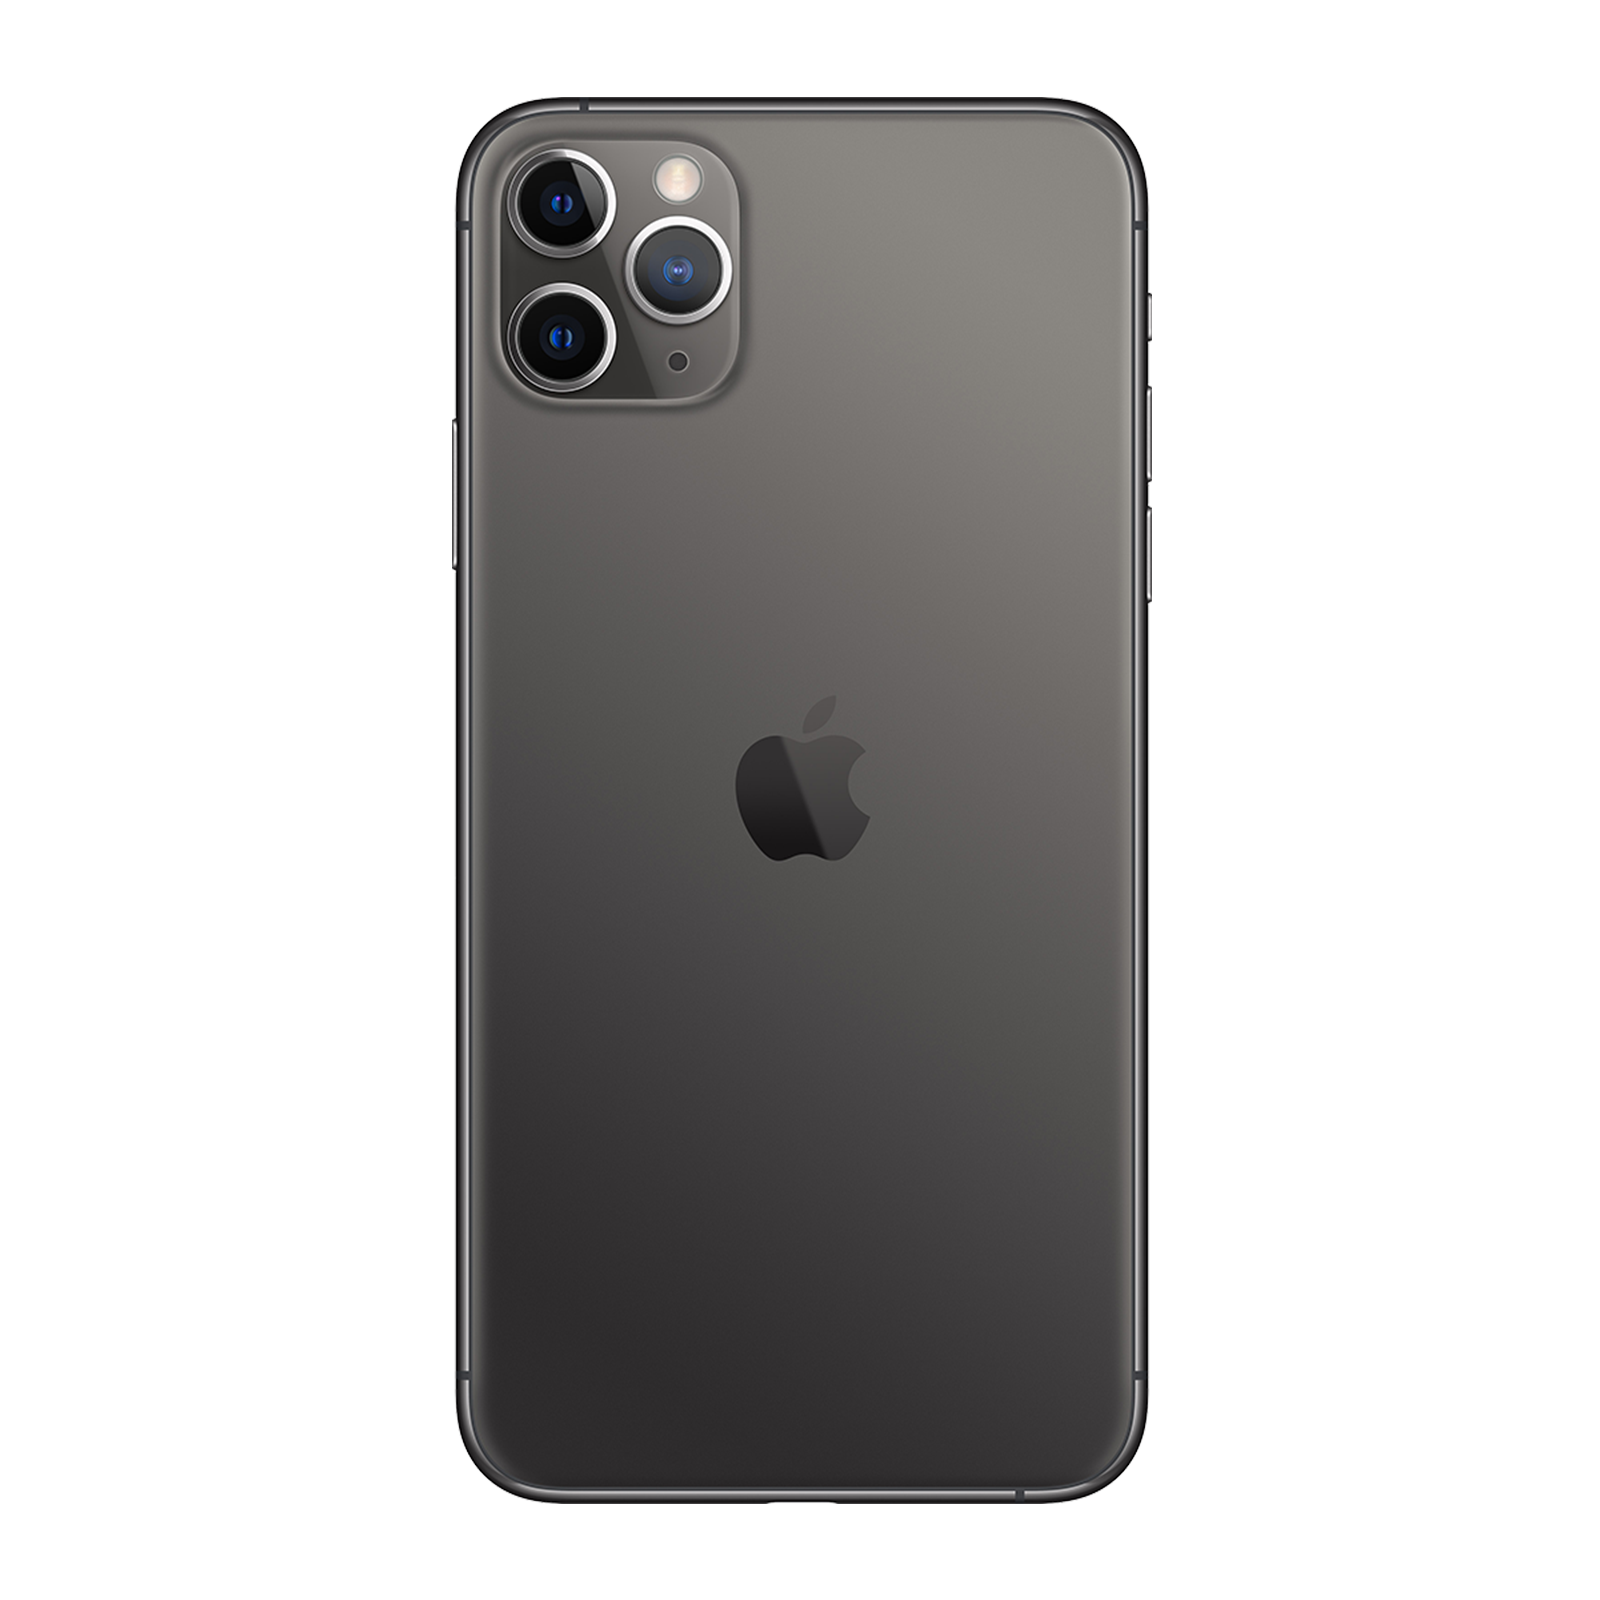 Apple iPhone 11 Pro Max 64GB Space Grey Good - Verizon